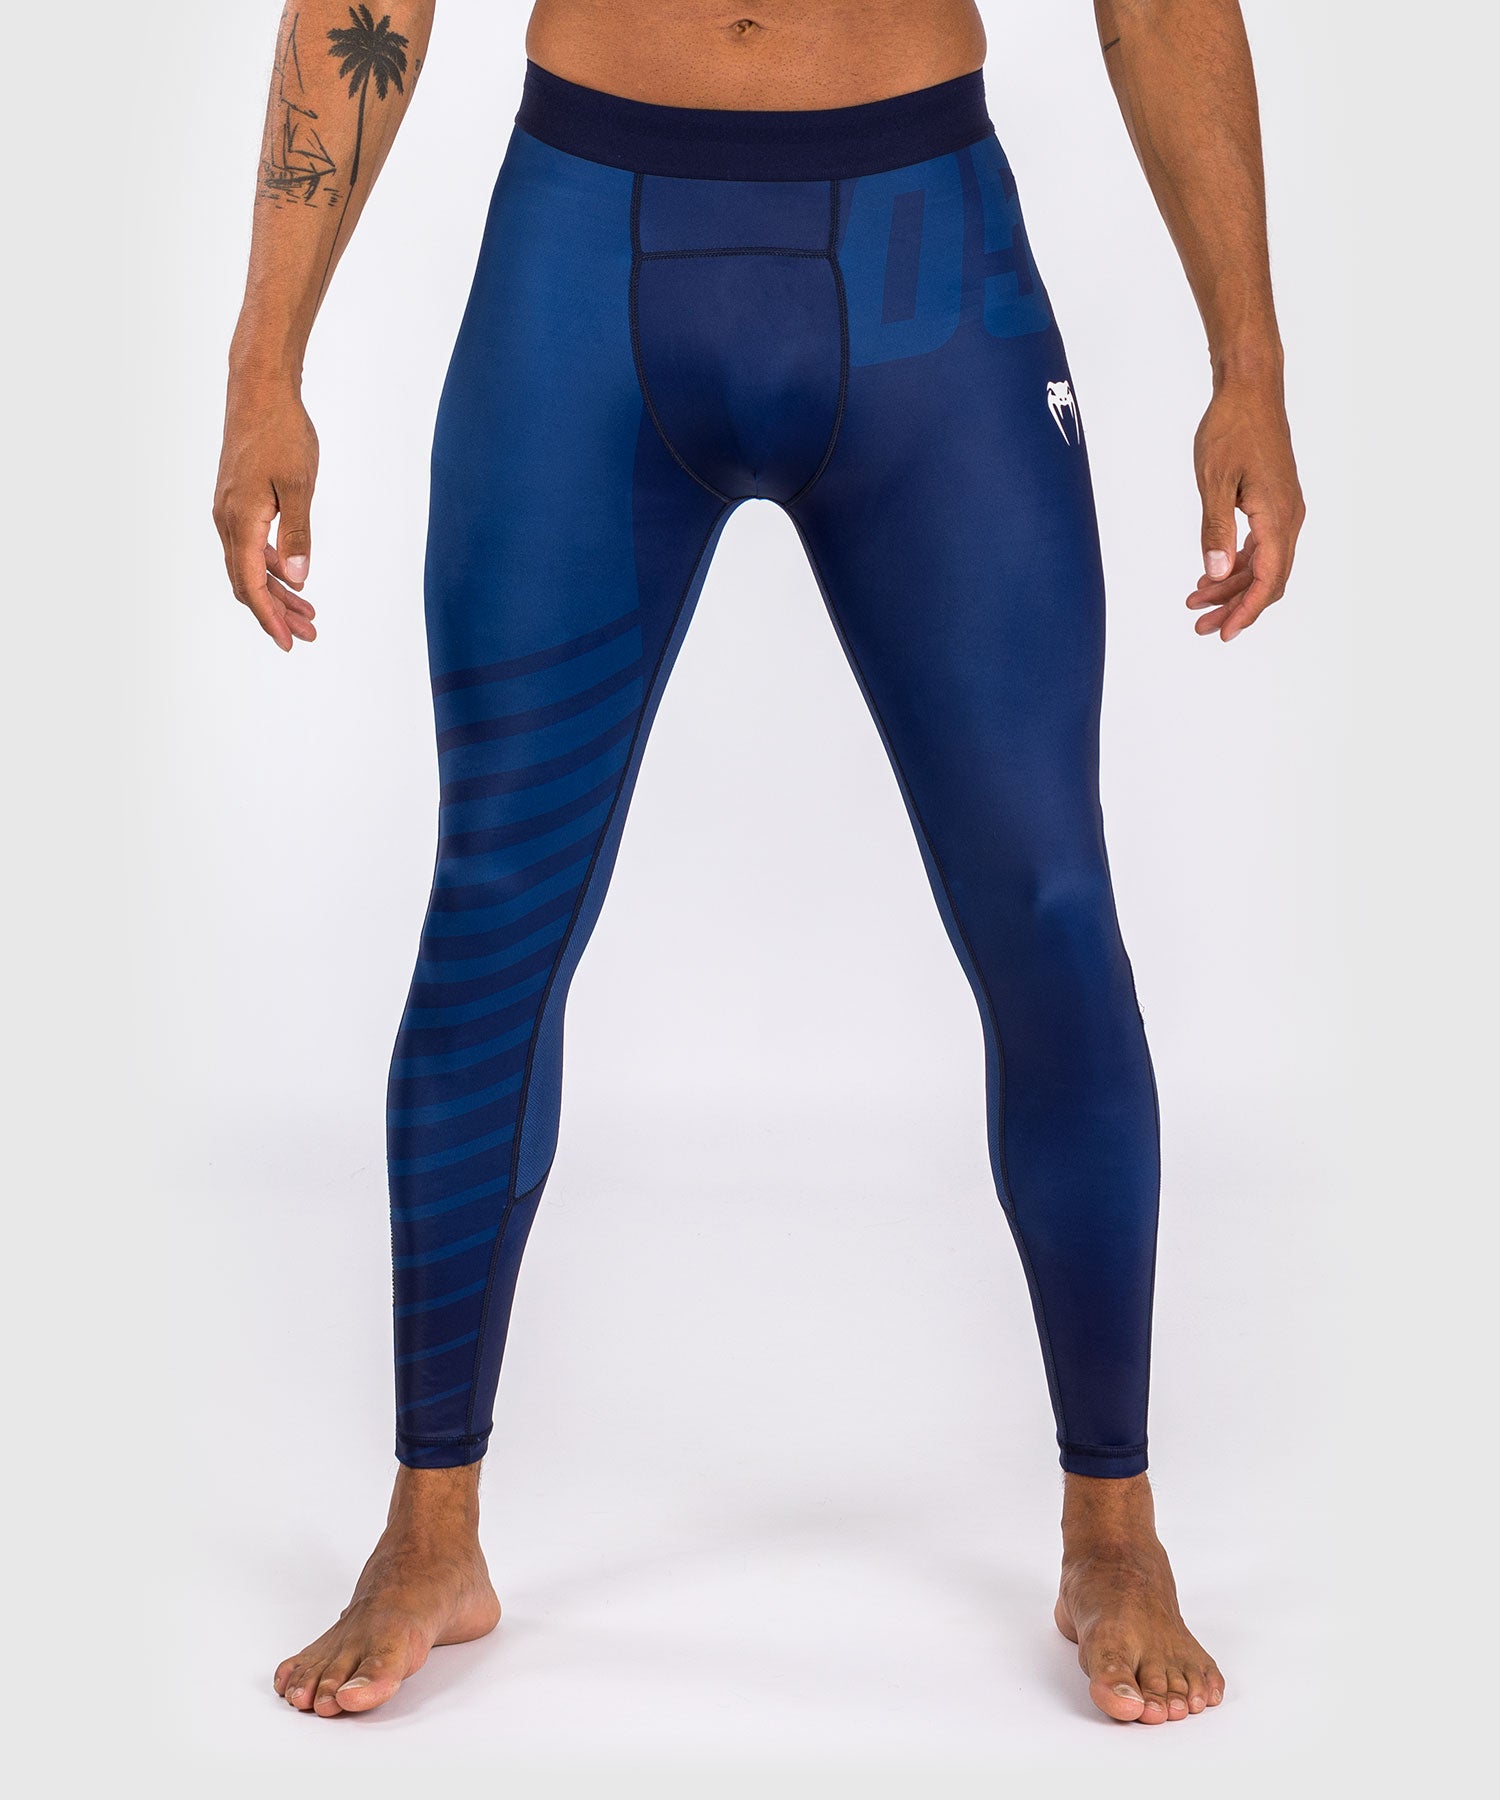 Pantalon de compression Venum Sport 05 - Bleu/Jaune - Pantalons de compression